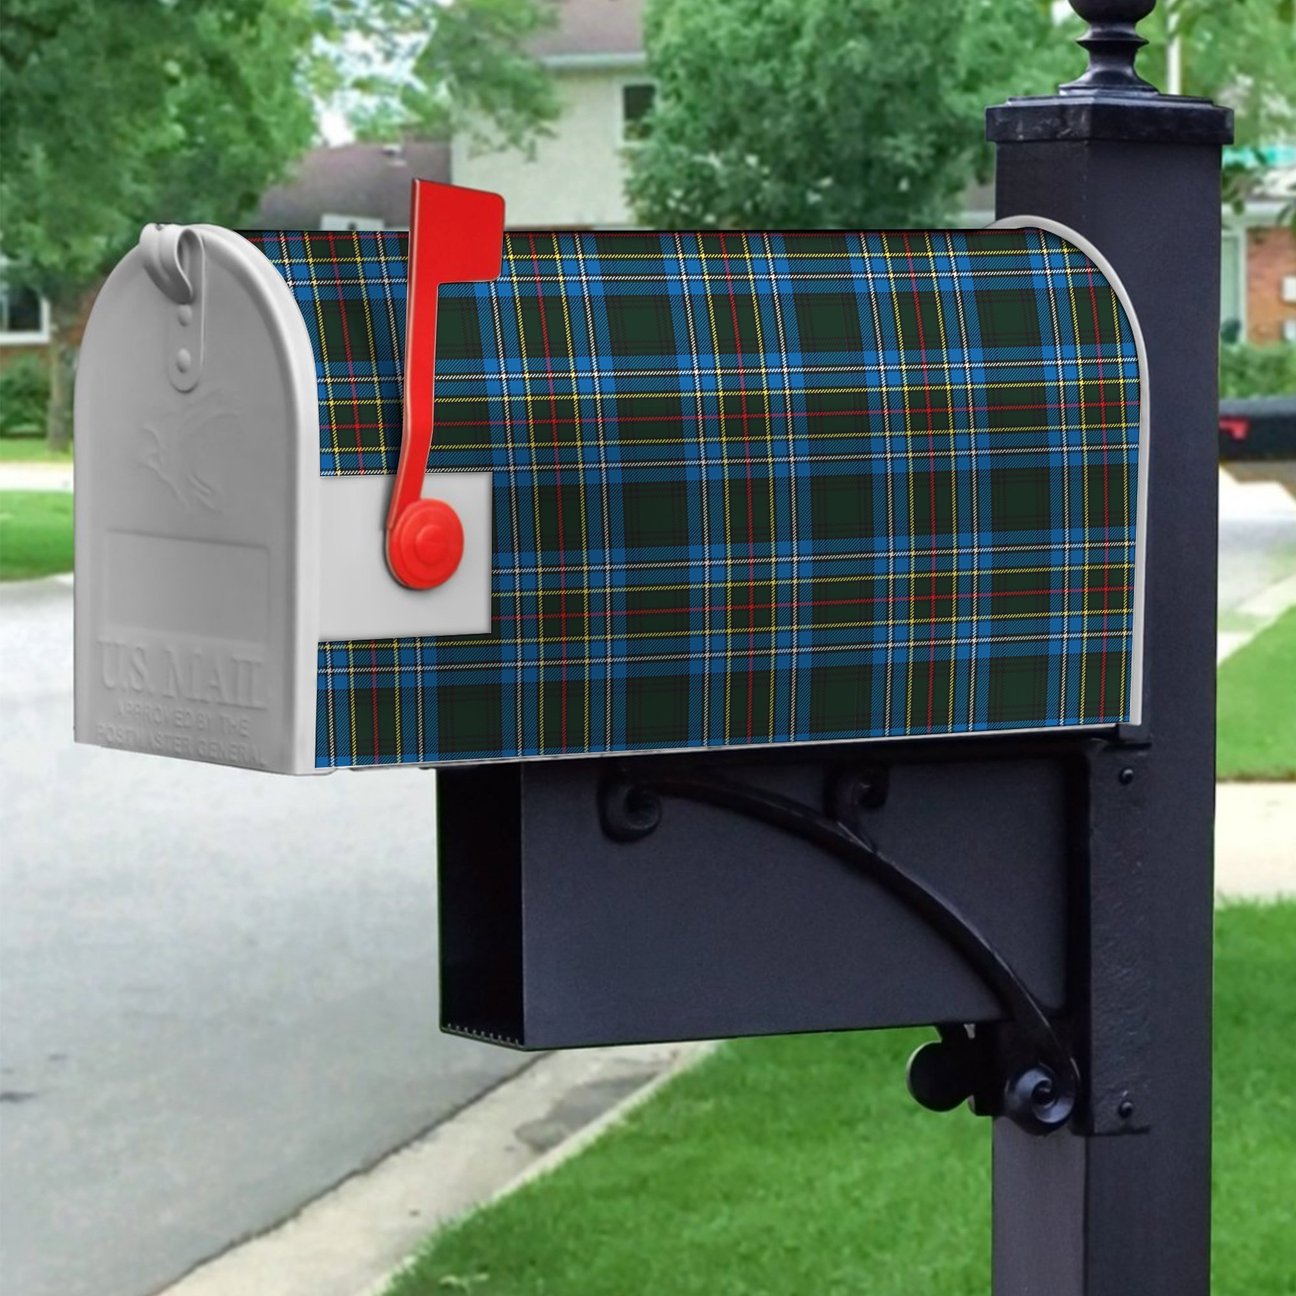 Cockburn Modern Tartan Crest Mailbox